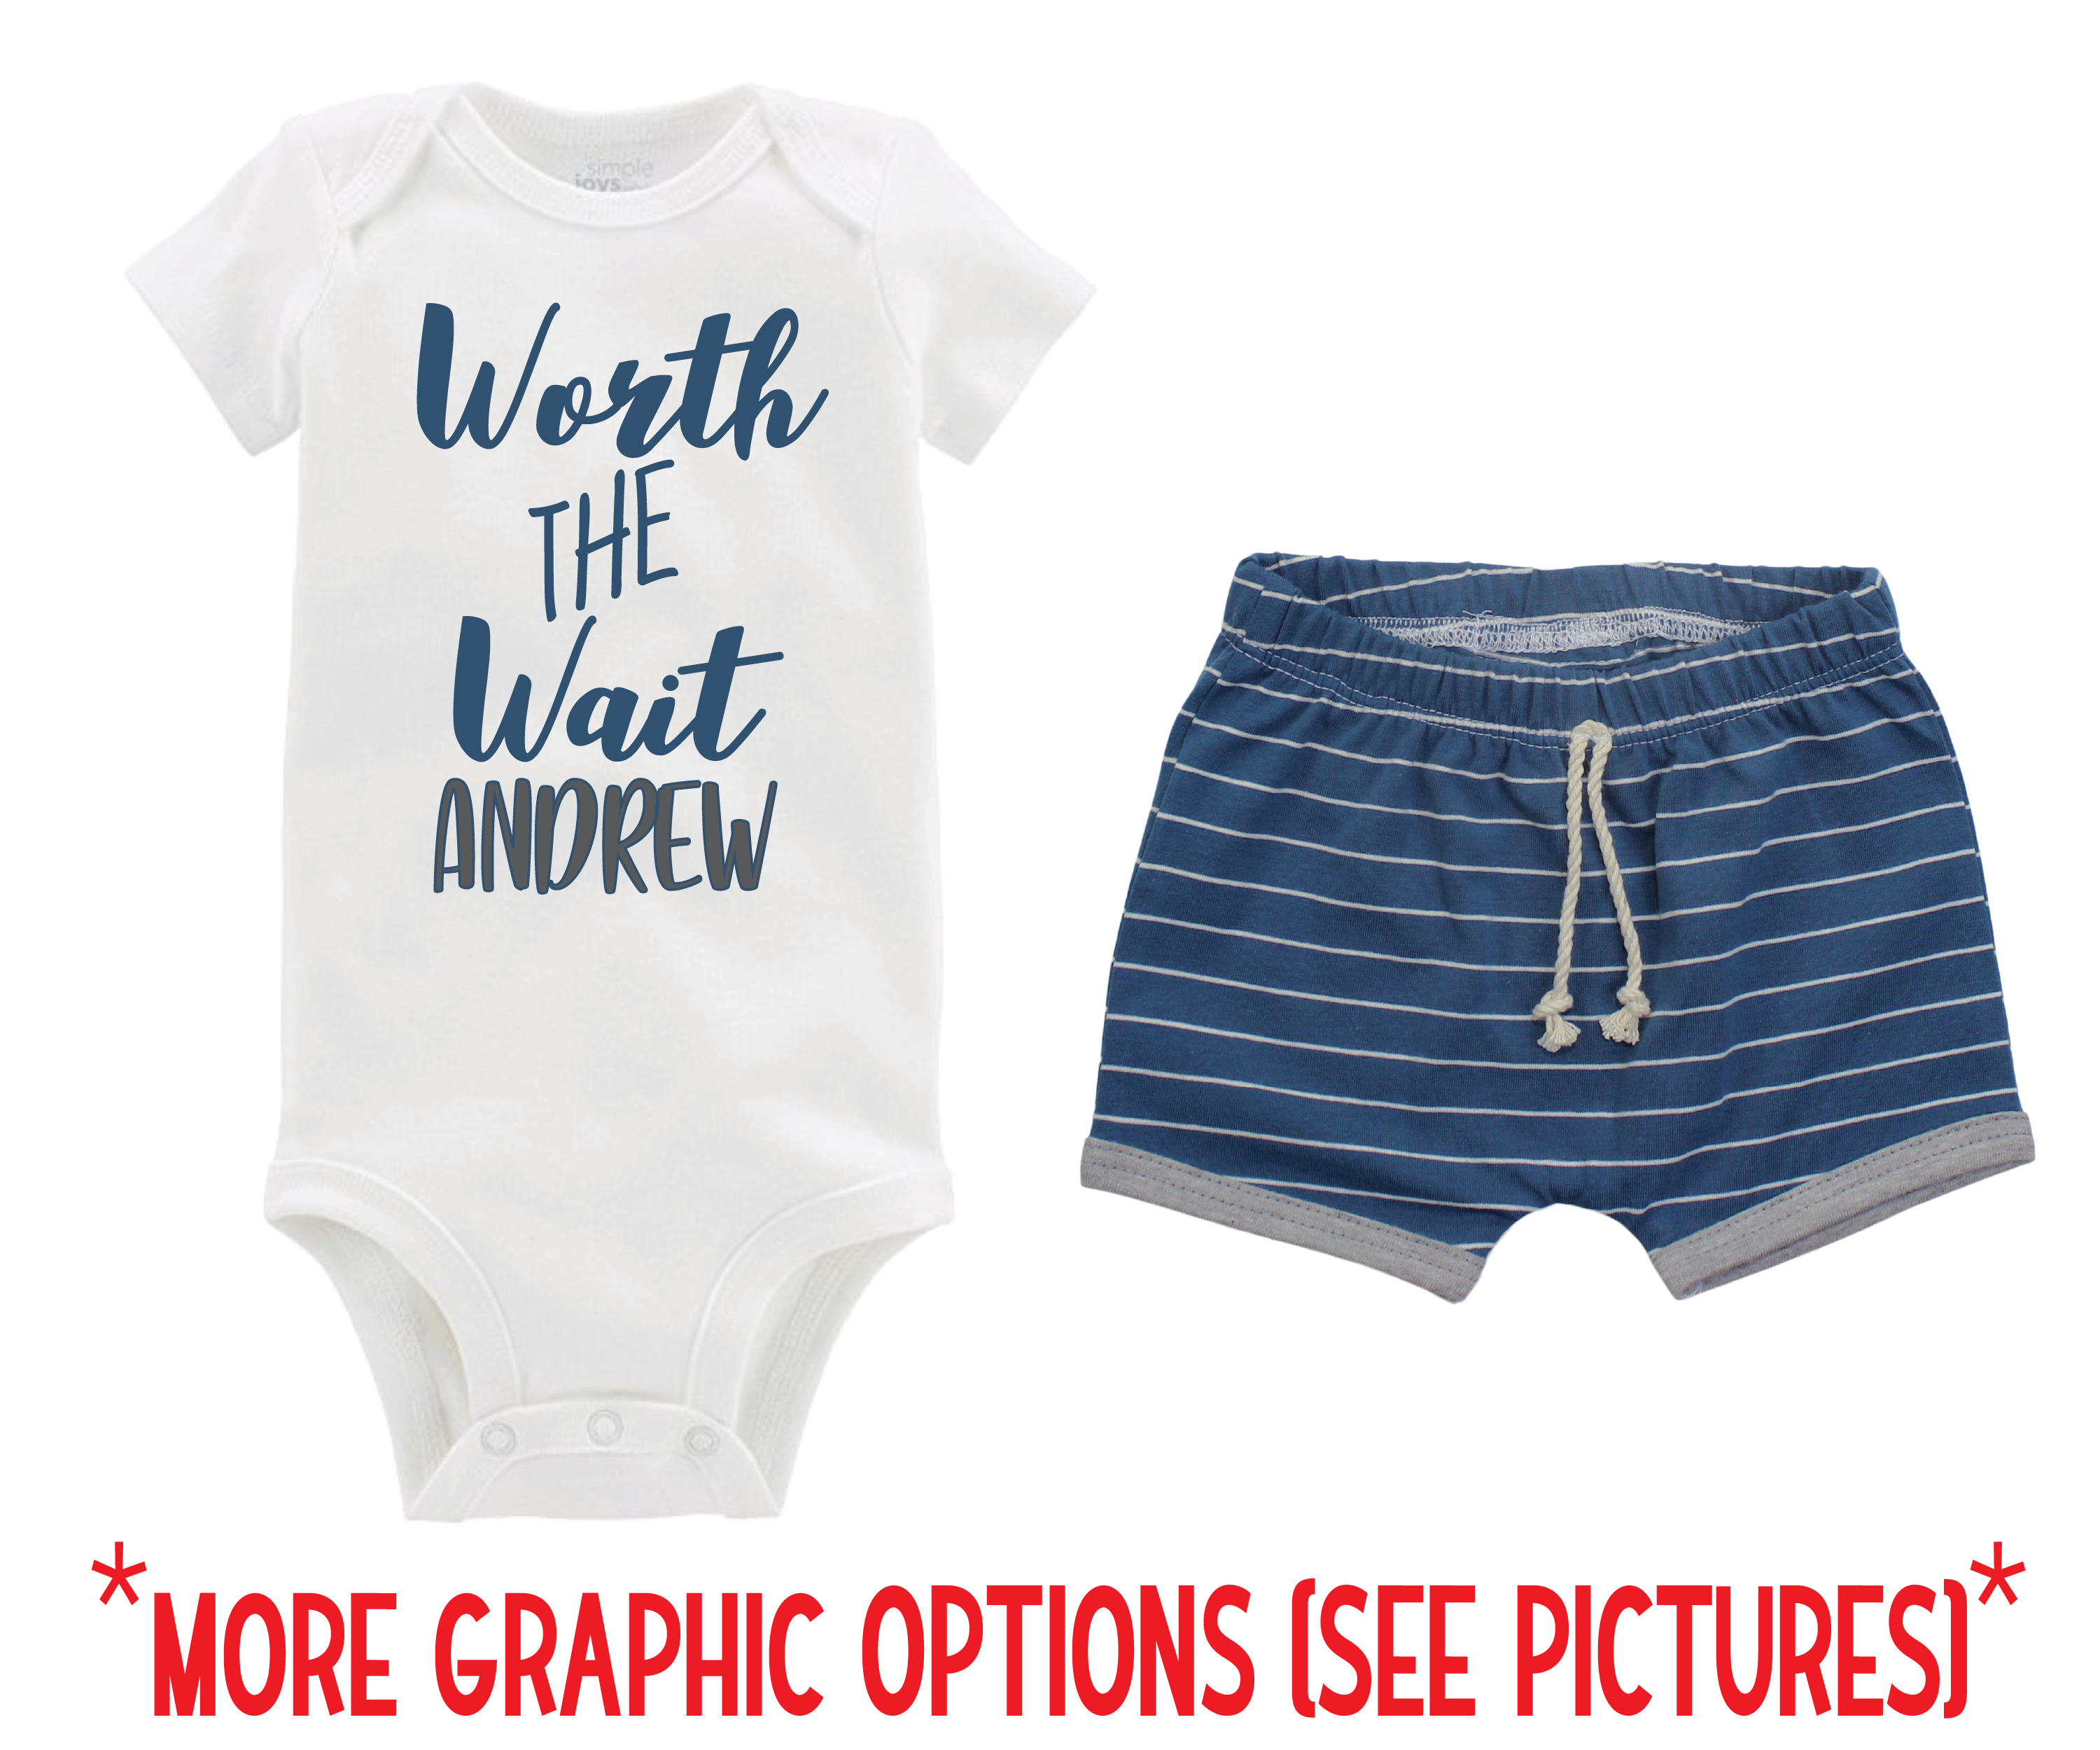 Boy Blue Stripe Toddler Short Outfit